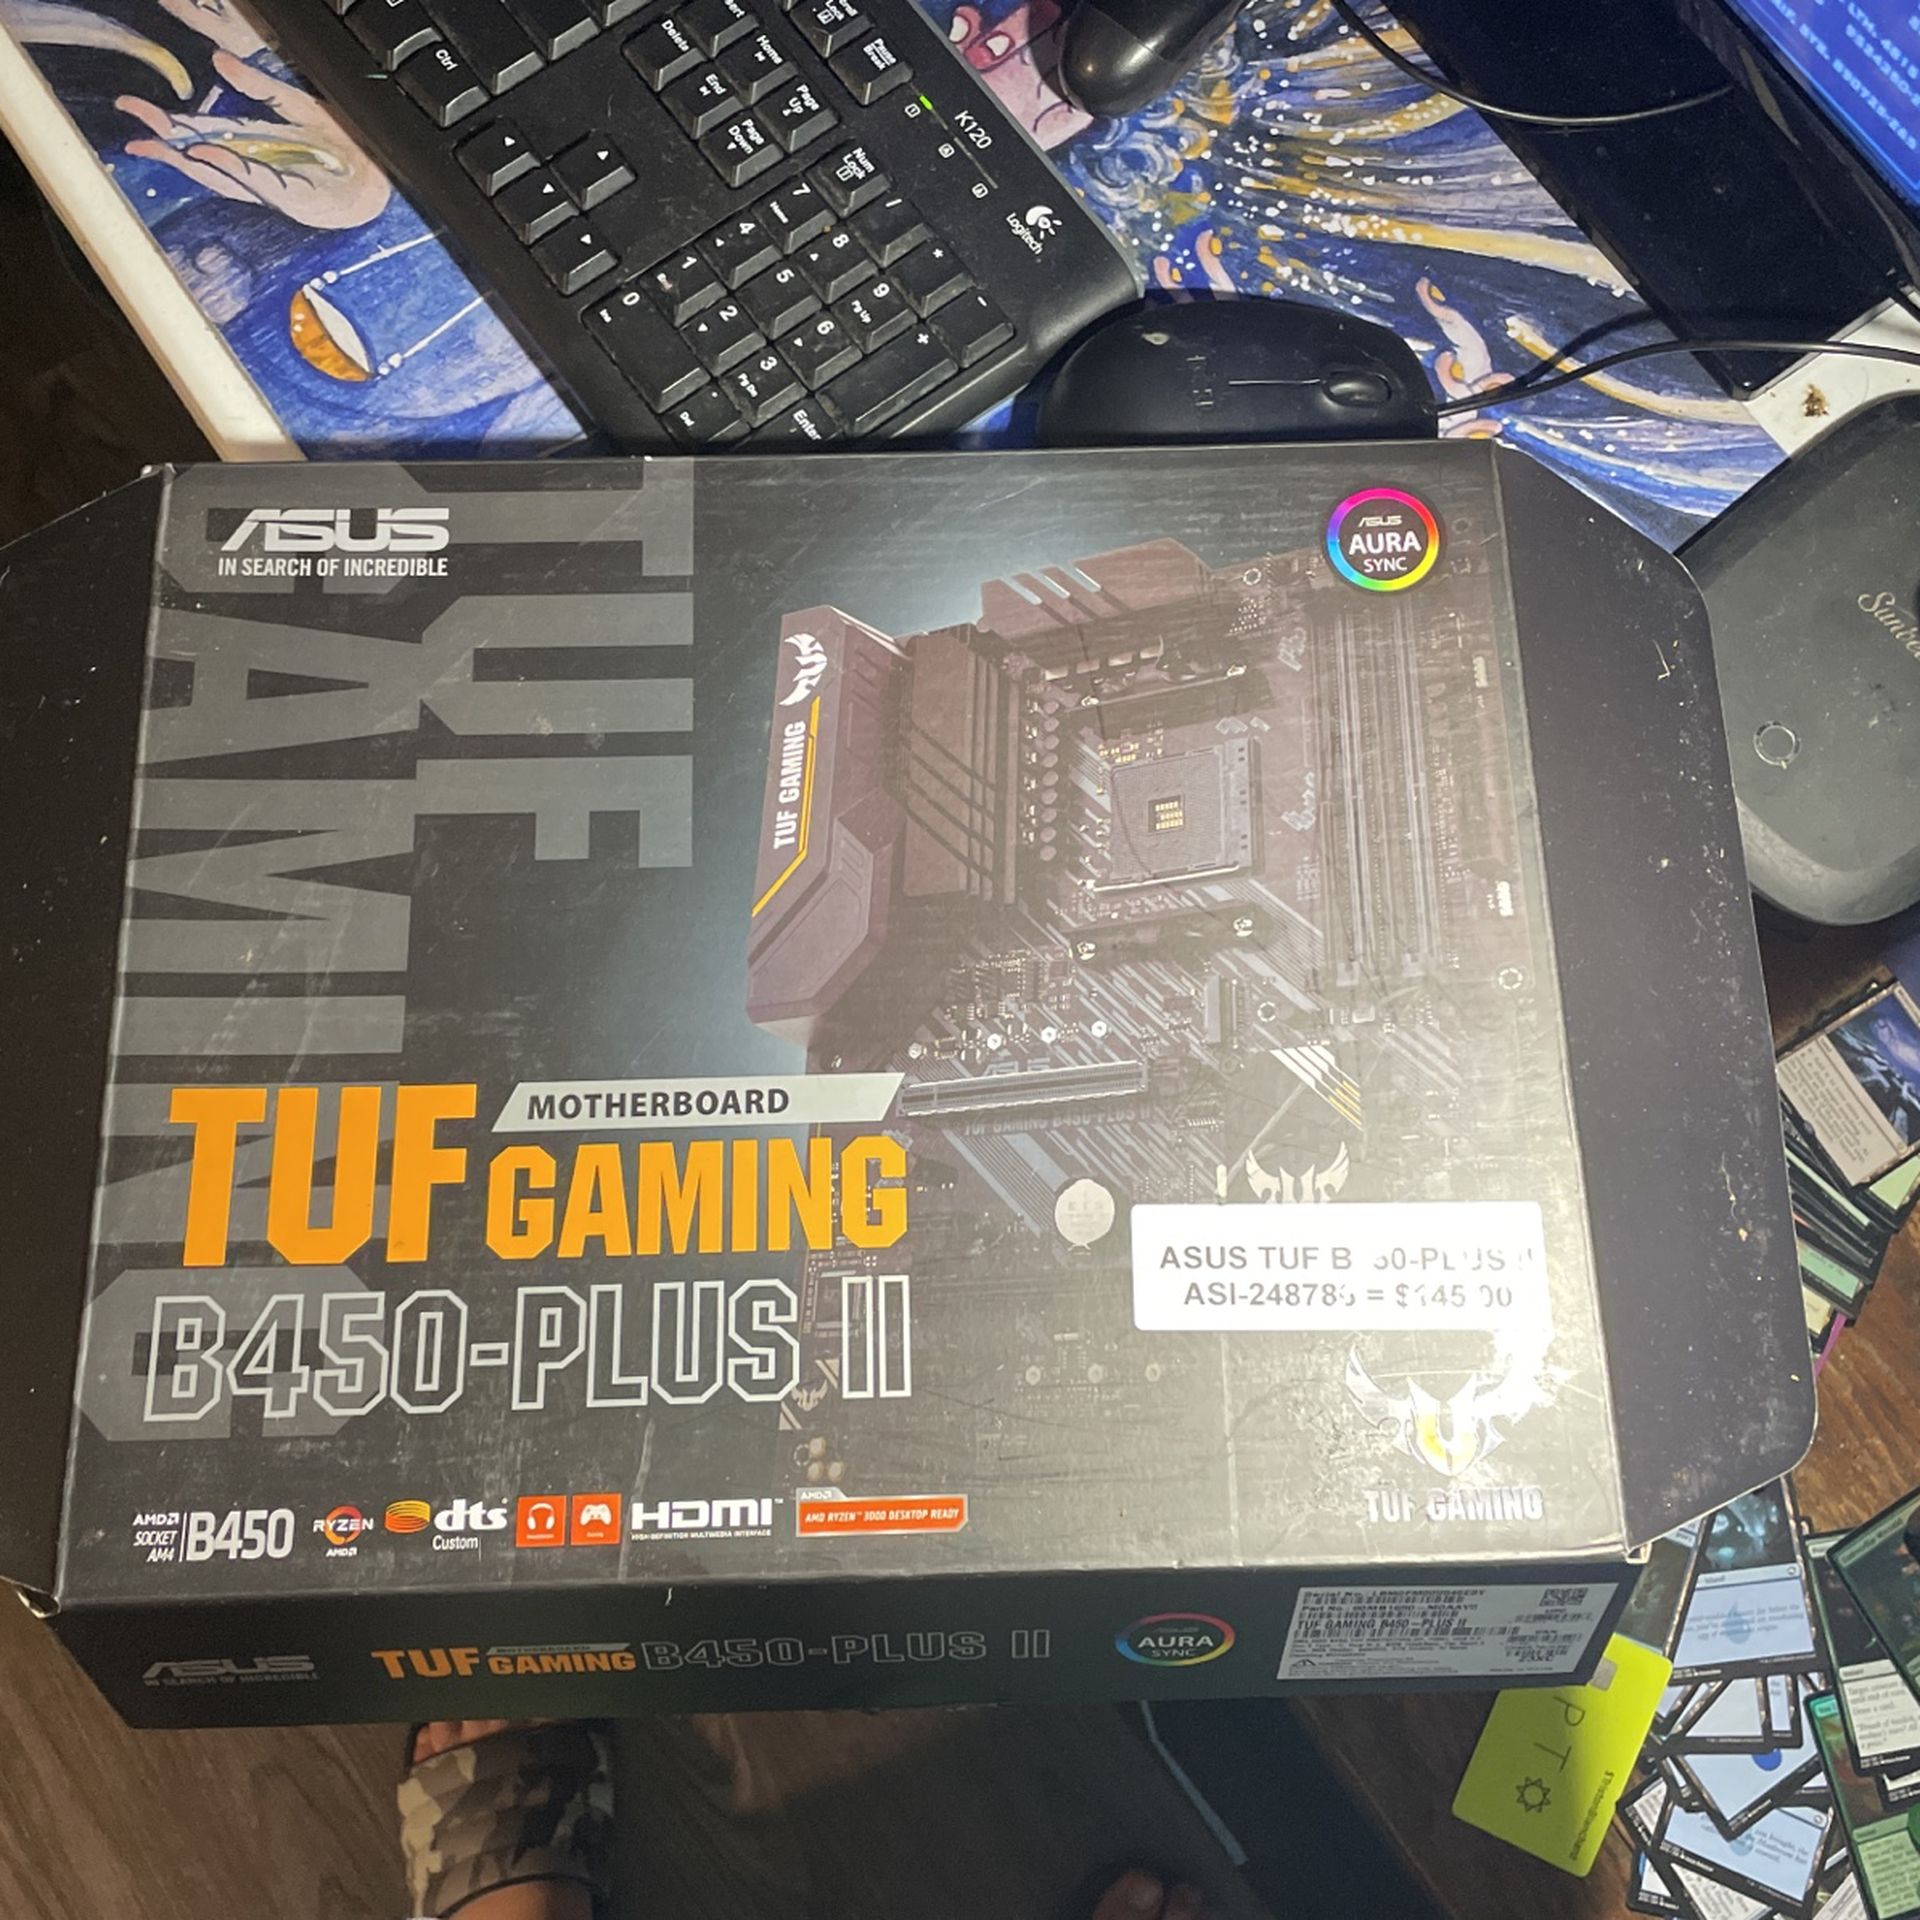 TUF Gaming Motherboard B450-plus 2 